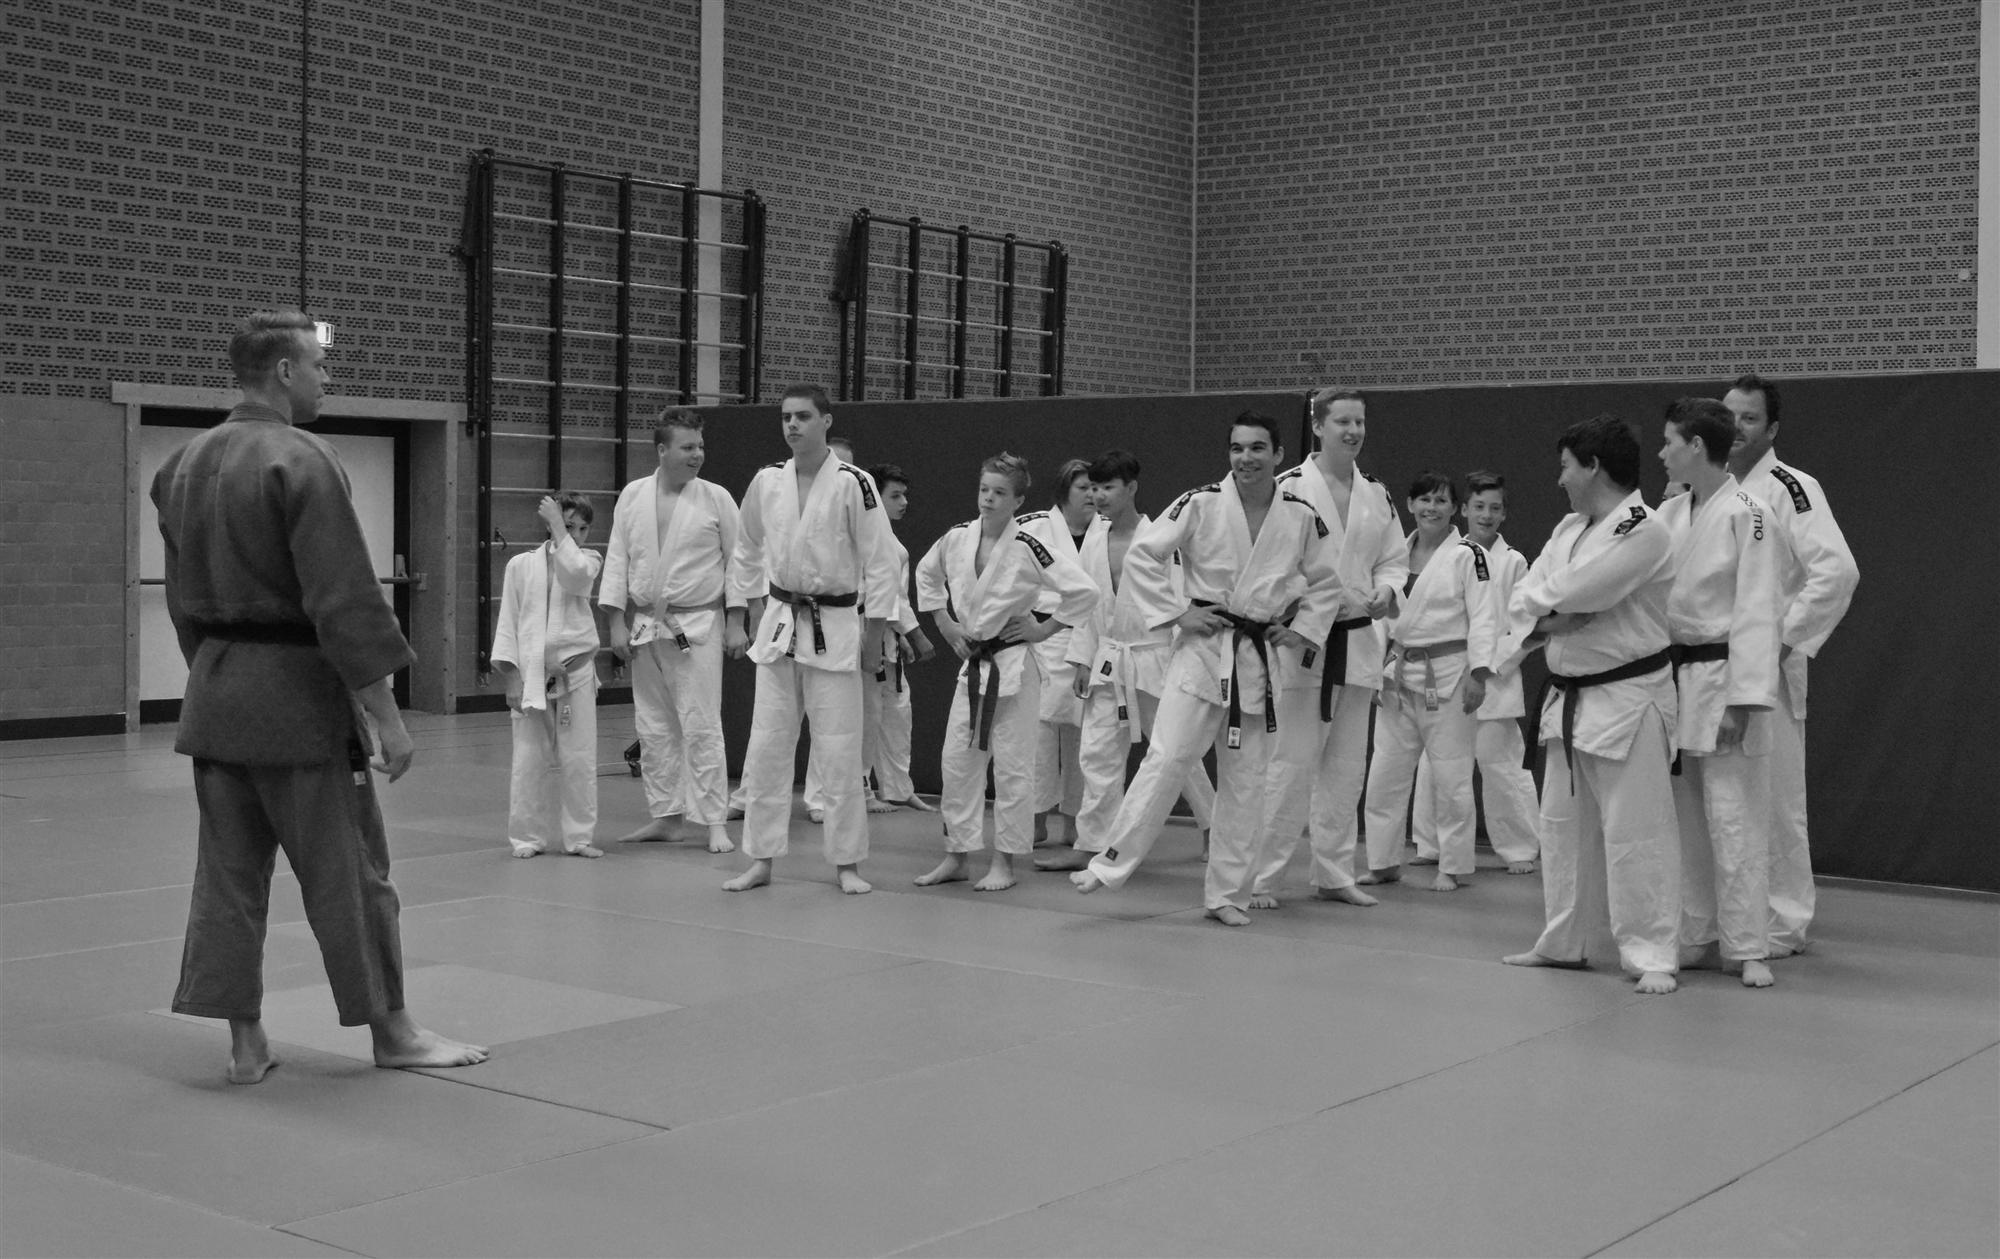 http://judoclubbrunssum.nl/en/iw-courses/b3/